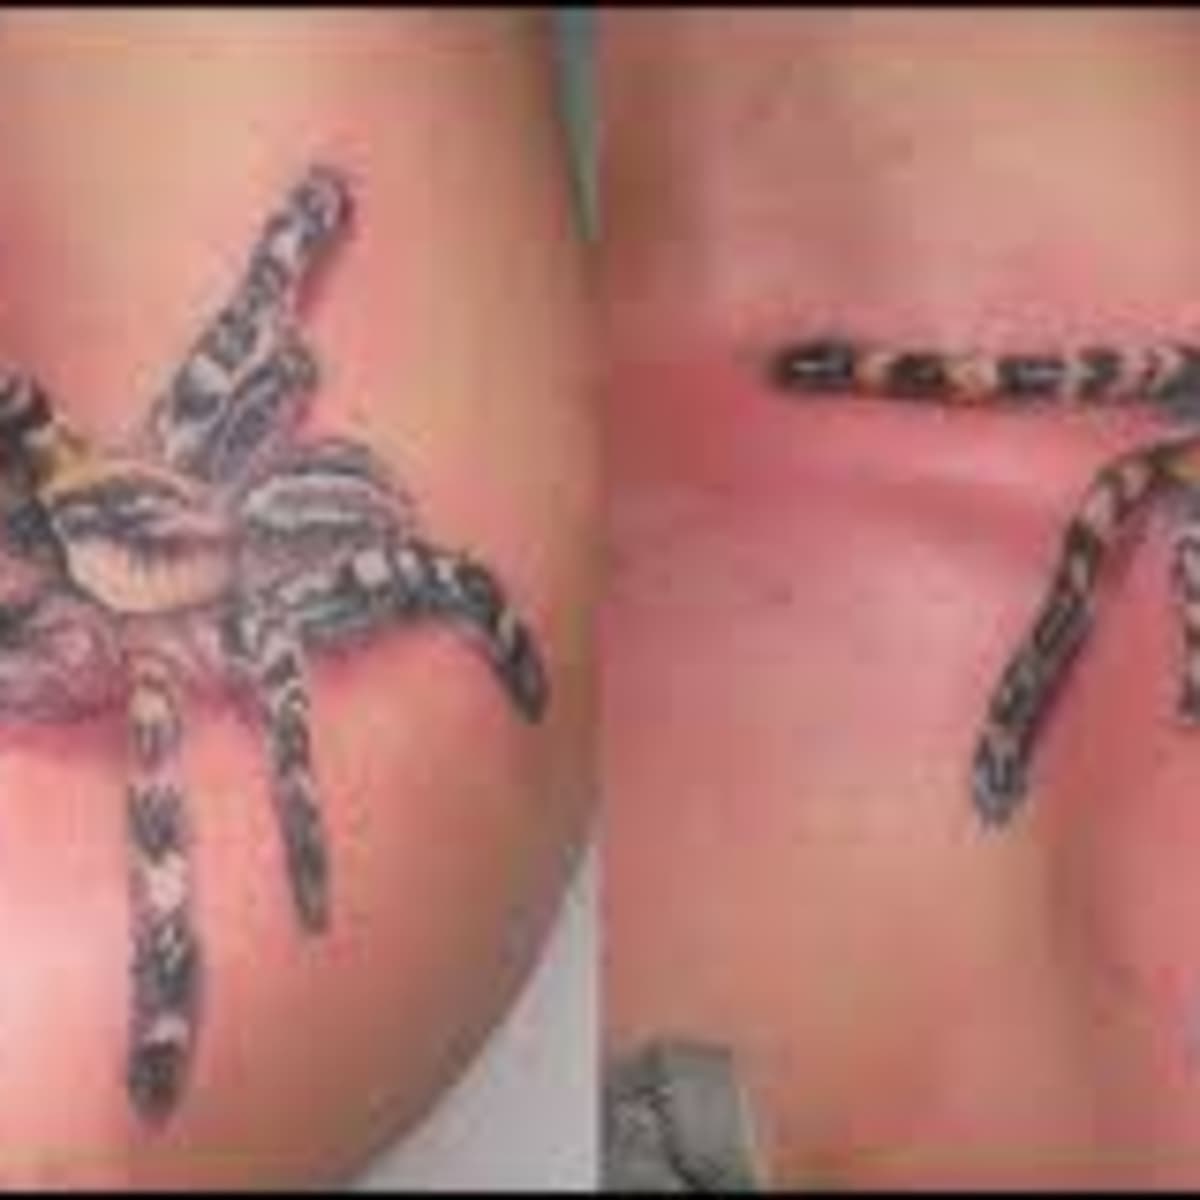 Spider web inside the arm spider tattoos  TikTok